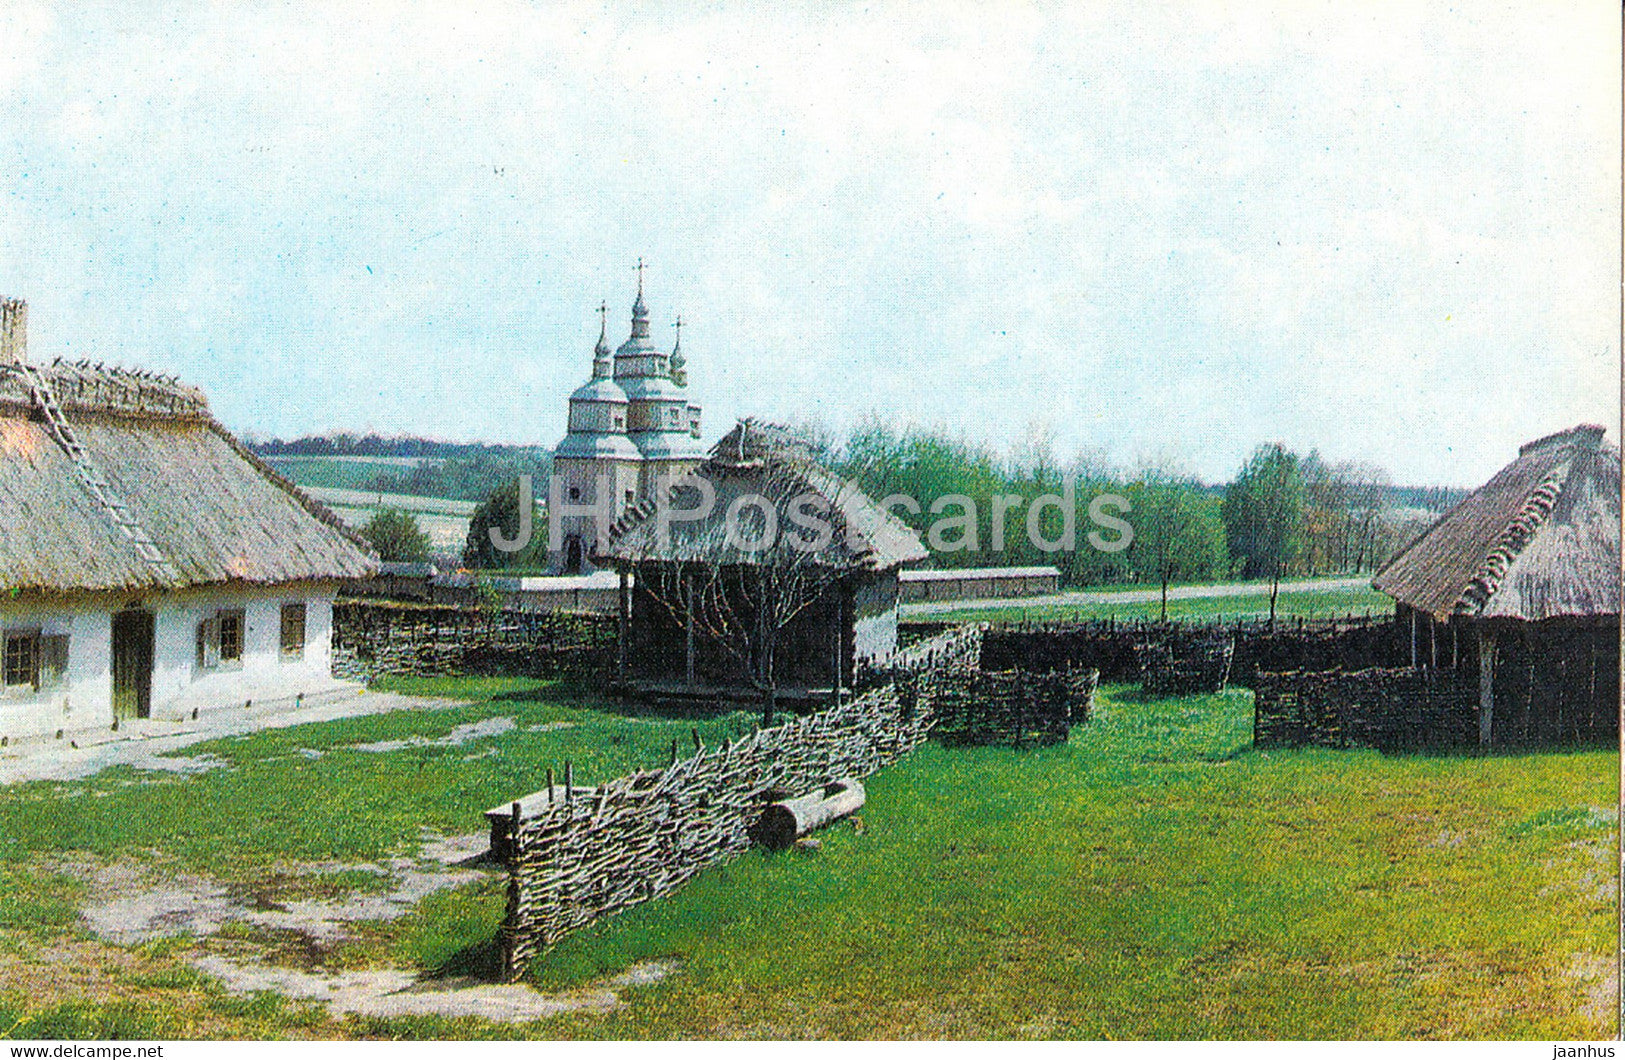 Museum of Ukrainian Folk Architecture and Life - Middle Dnieper exposition - 1977 - Ukraine USSR - unused - JH Postcards